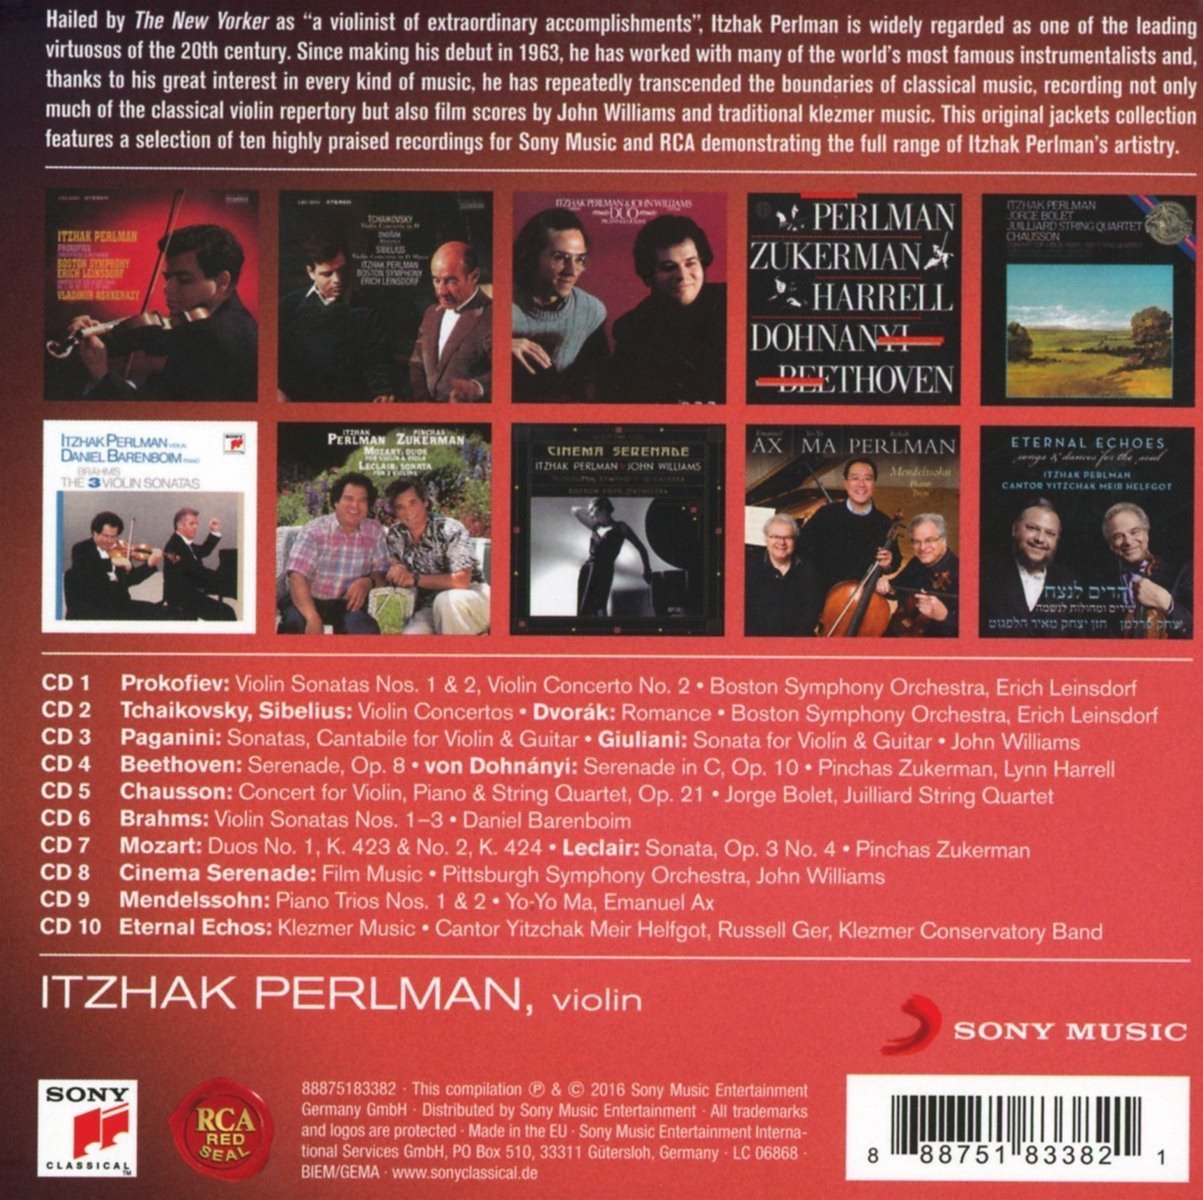 THE ART OF ITZHAK PERLMAN (10 CDs)